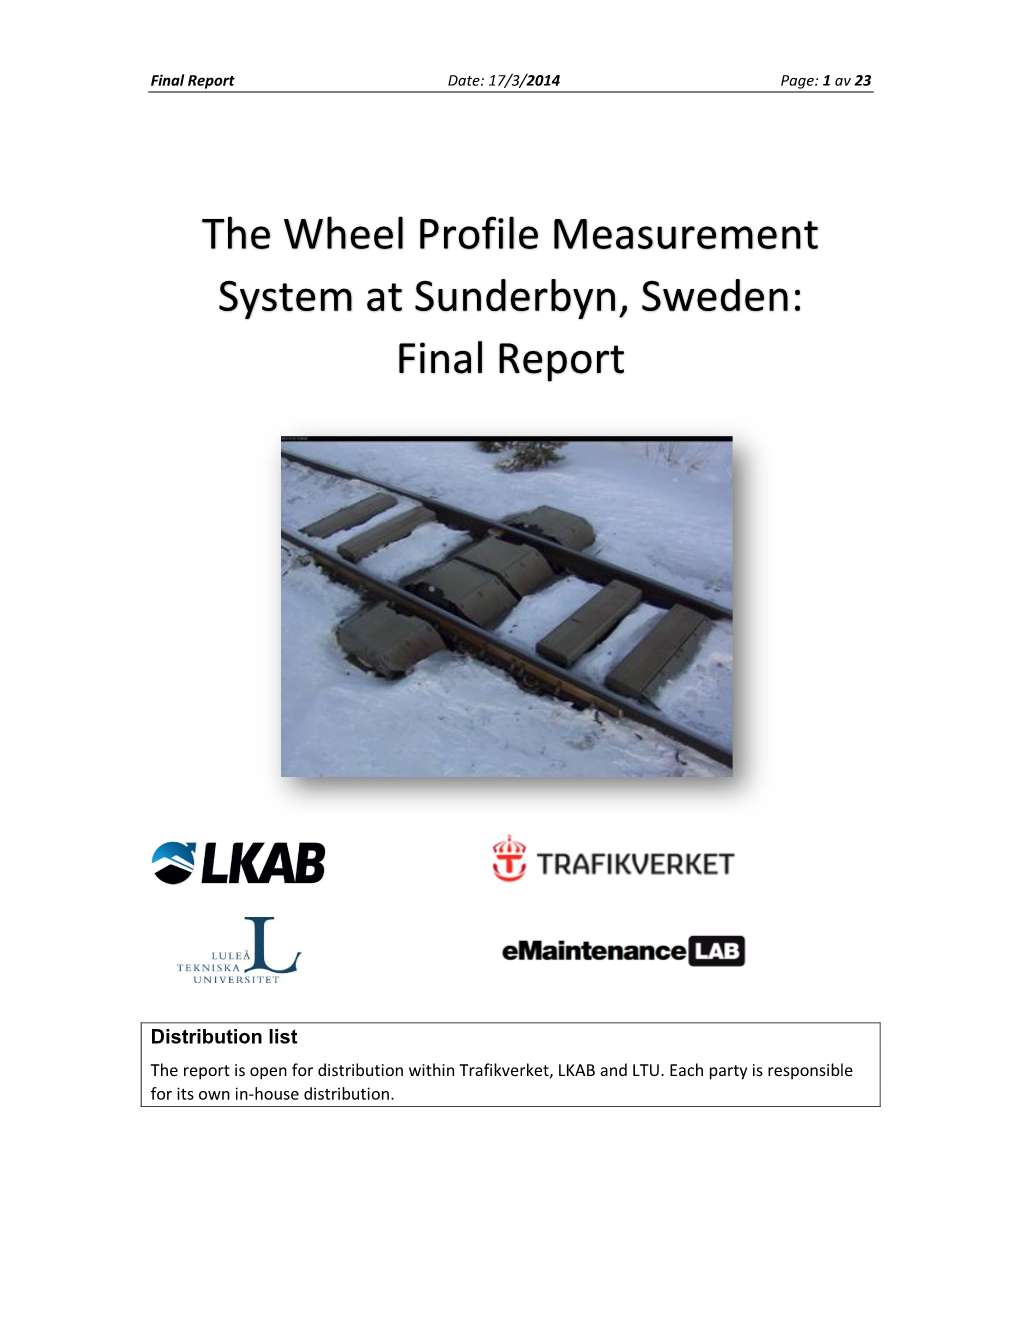 The Wheel Profile Measurement System at Sunderbyn, Sweden: Final Report